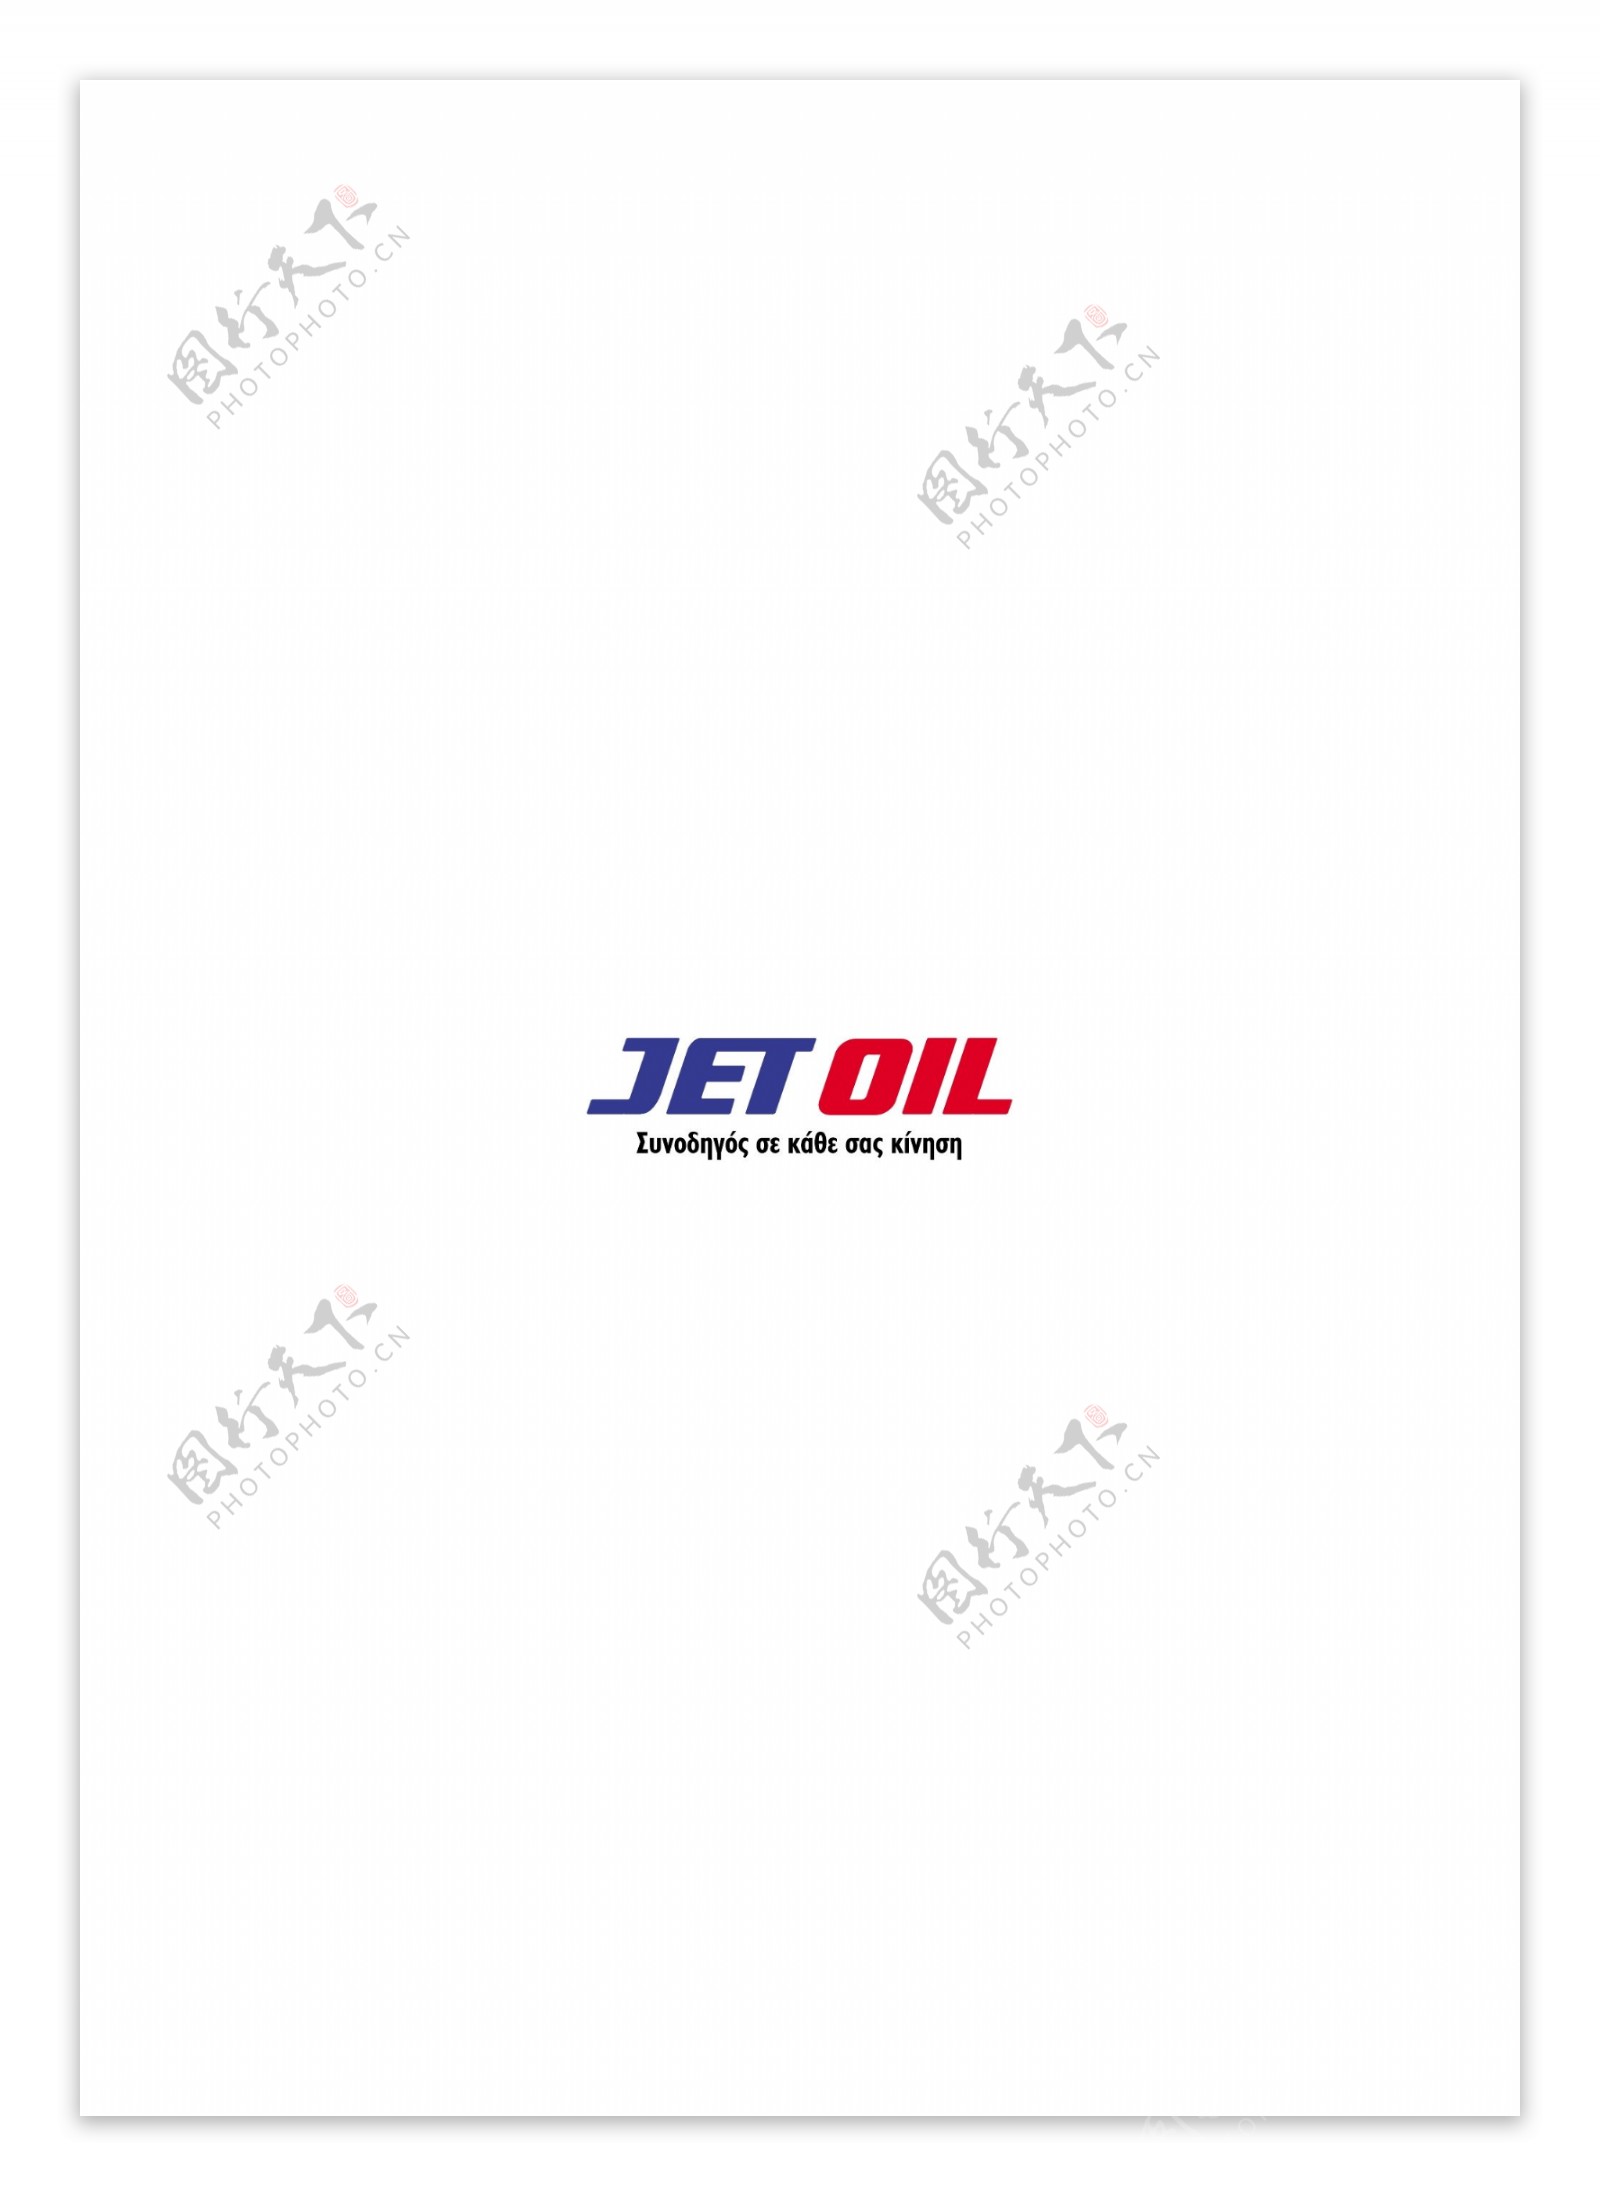 JetOillogo设计欣赏JetOil重工LOGO下载标志设计欣赏